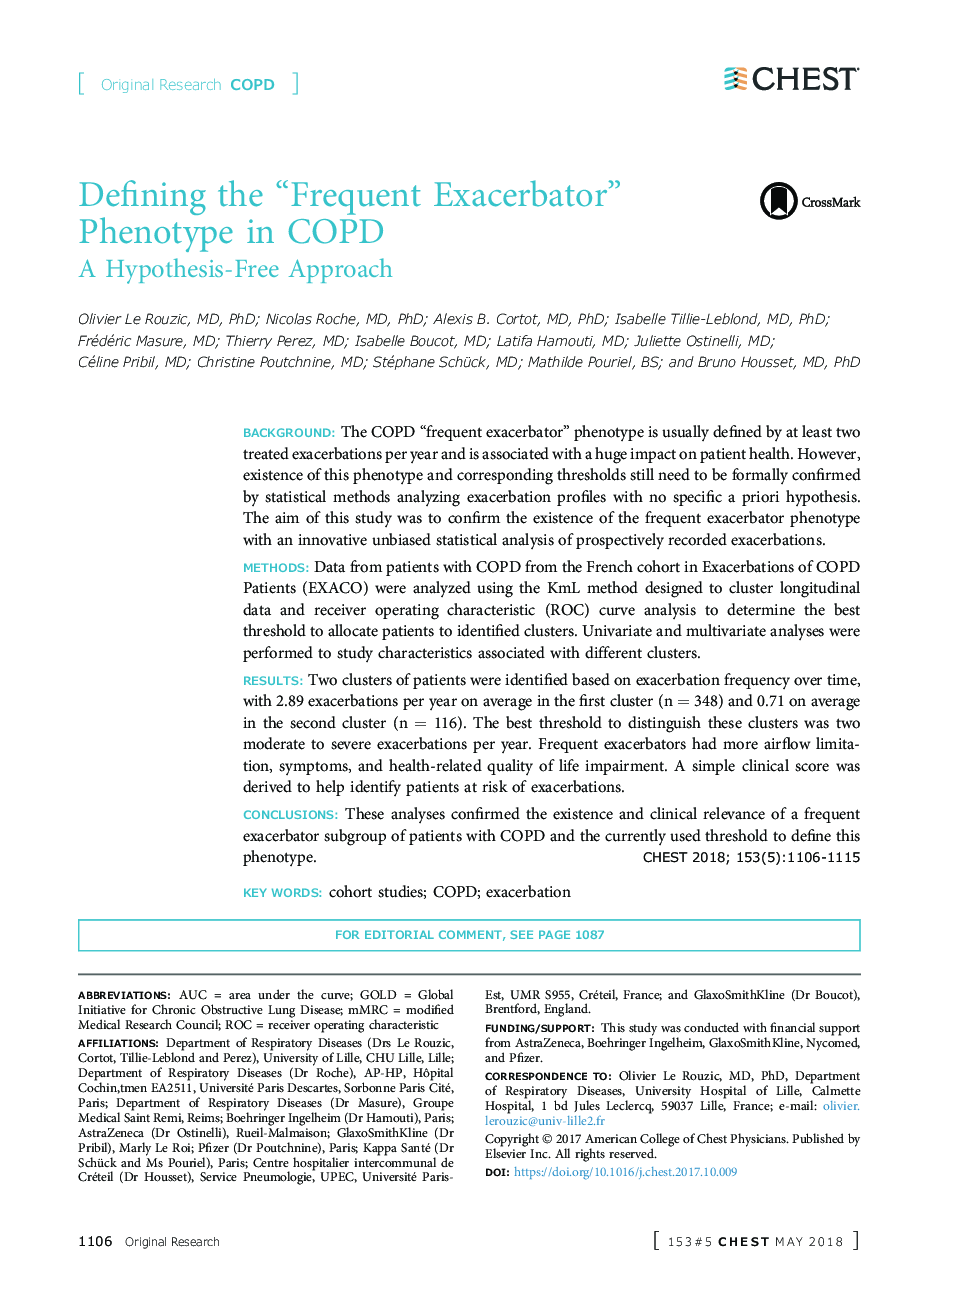 Defining the “Frequent Exacerbator” Phenotype in COPD